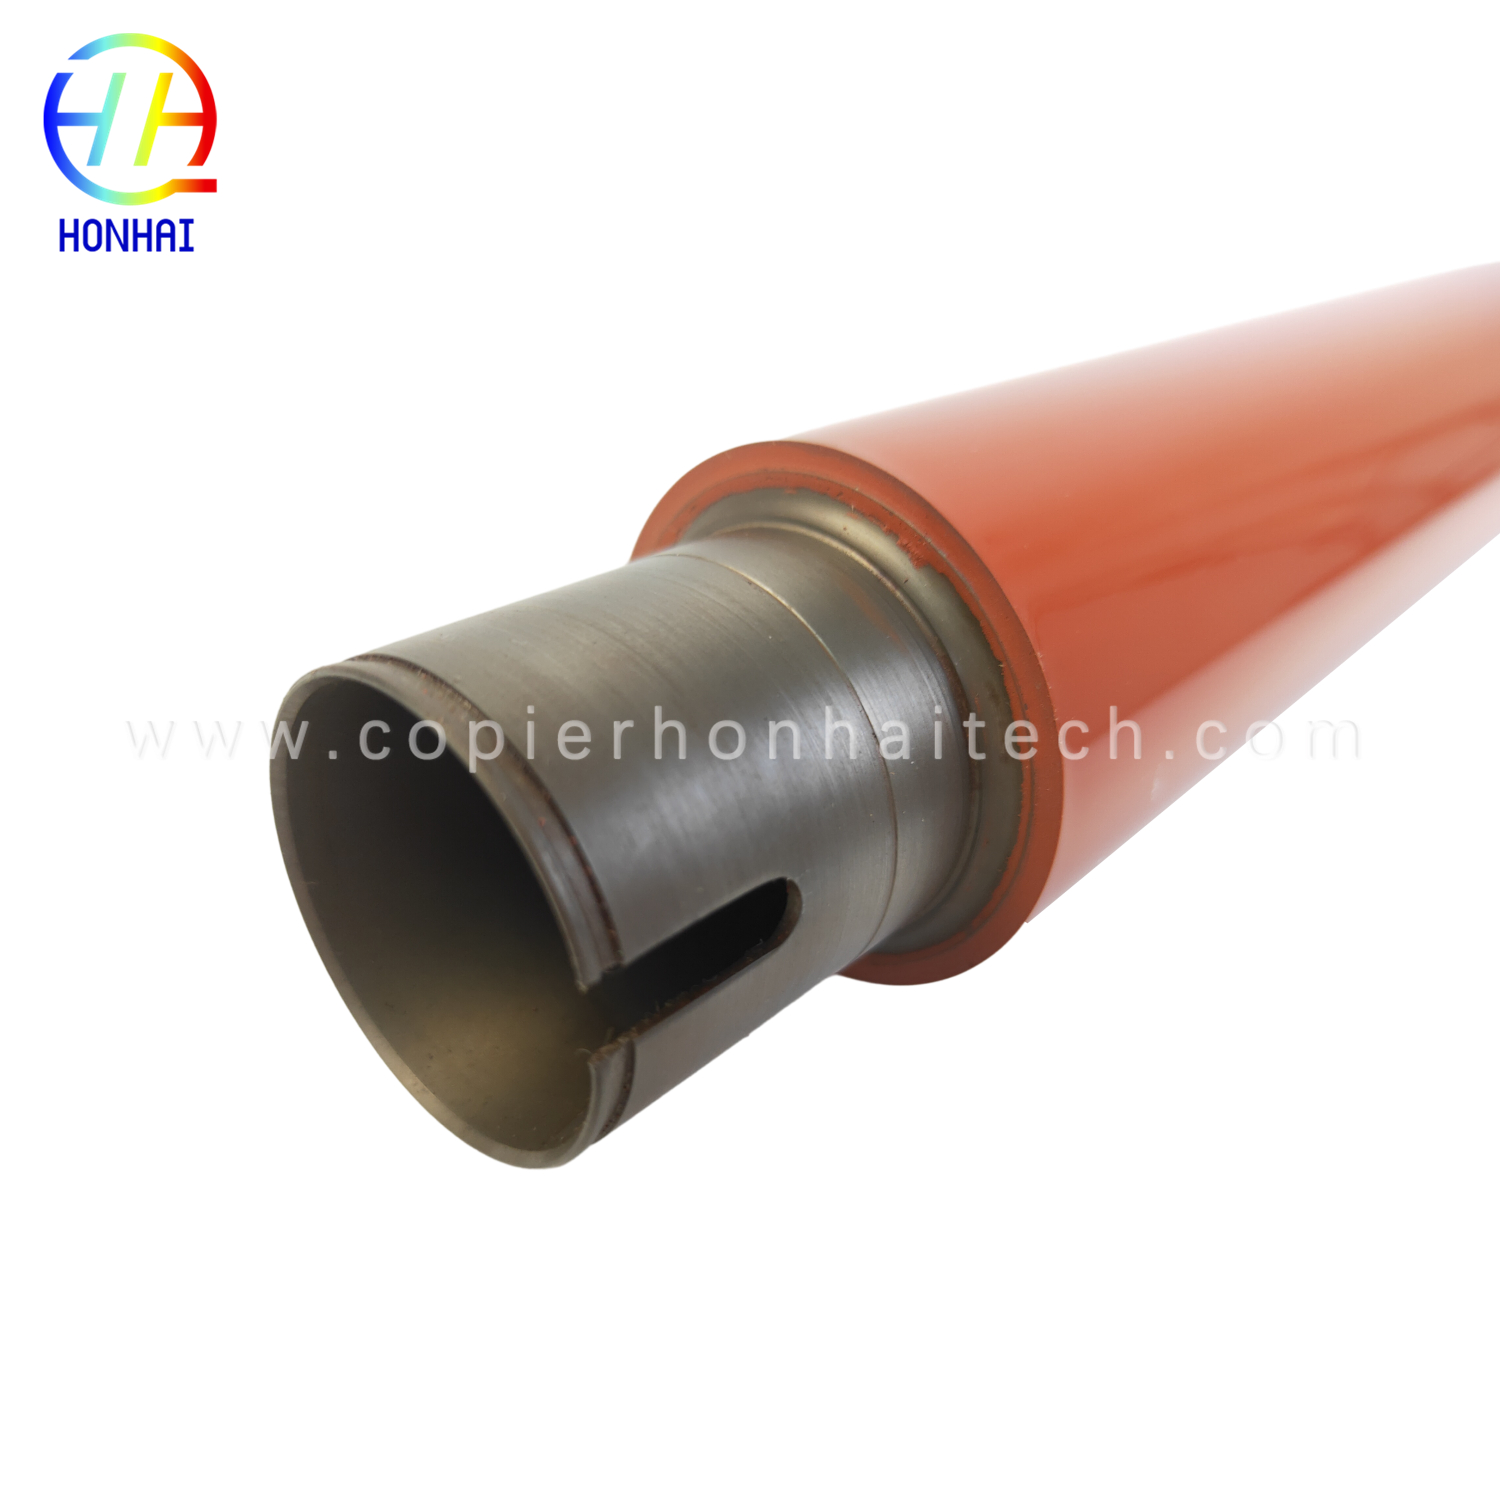 https://www.copierhonhaitech.com/oem-upper-fuser-heat-roller-for-sharp-nrolm1748fczz-mx-2600n-3100n-product/